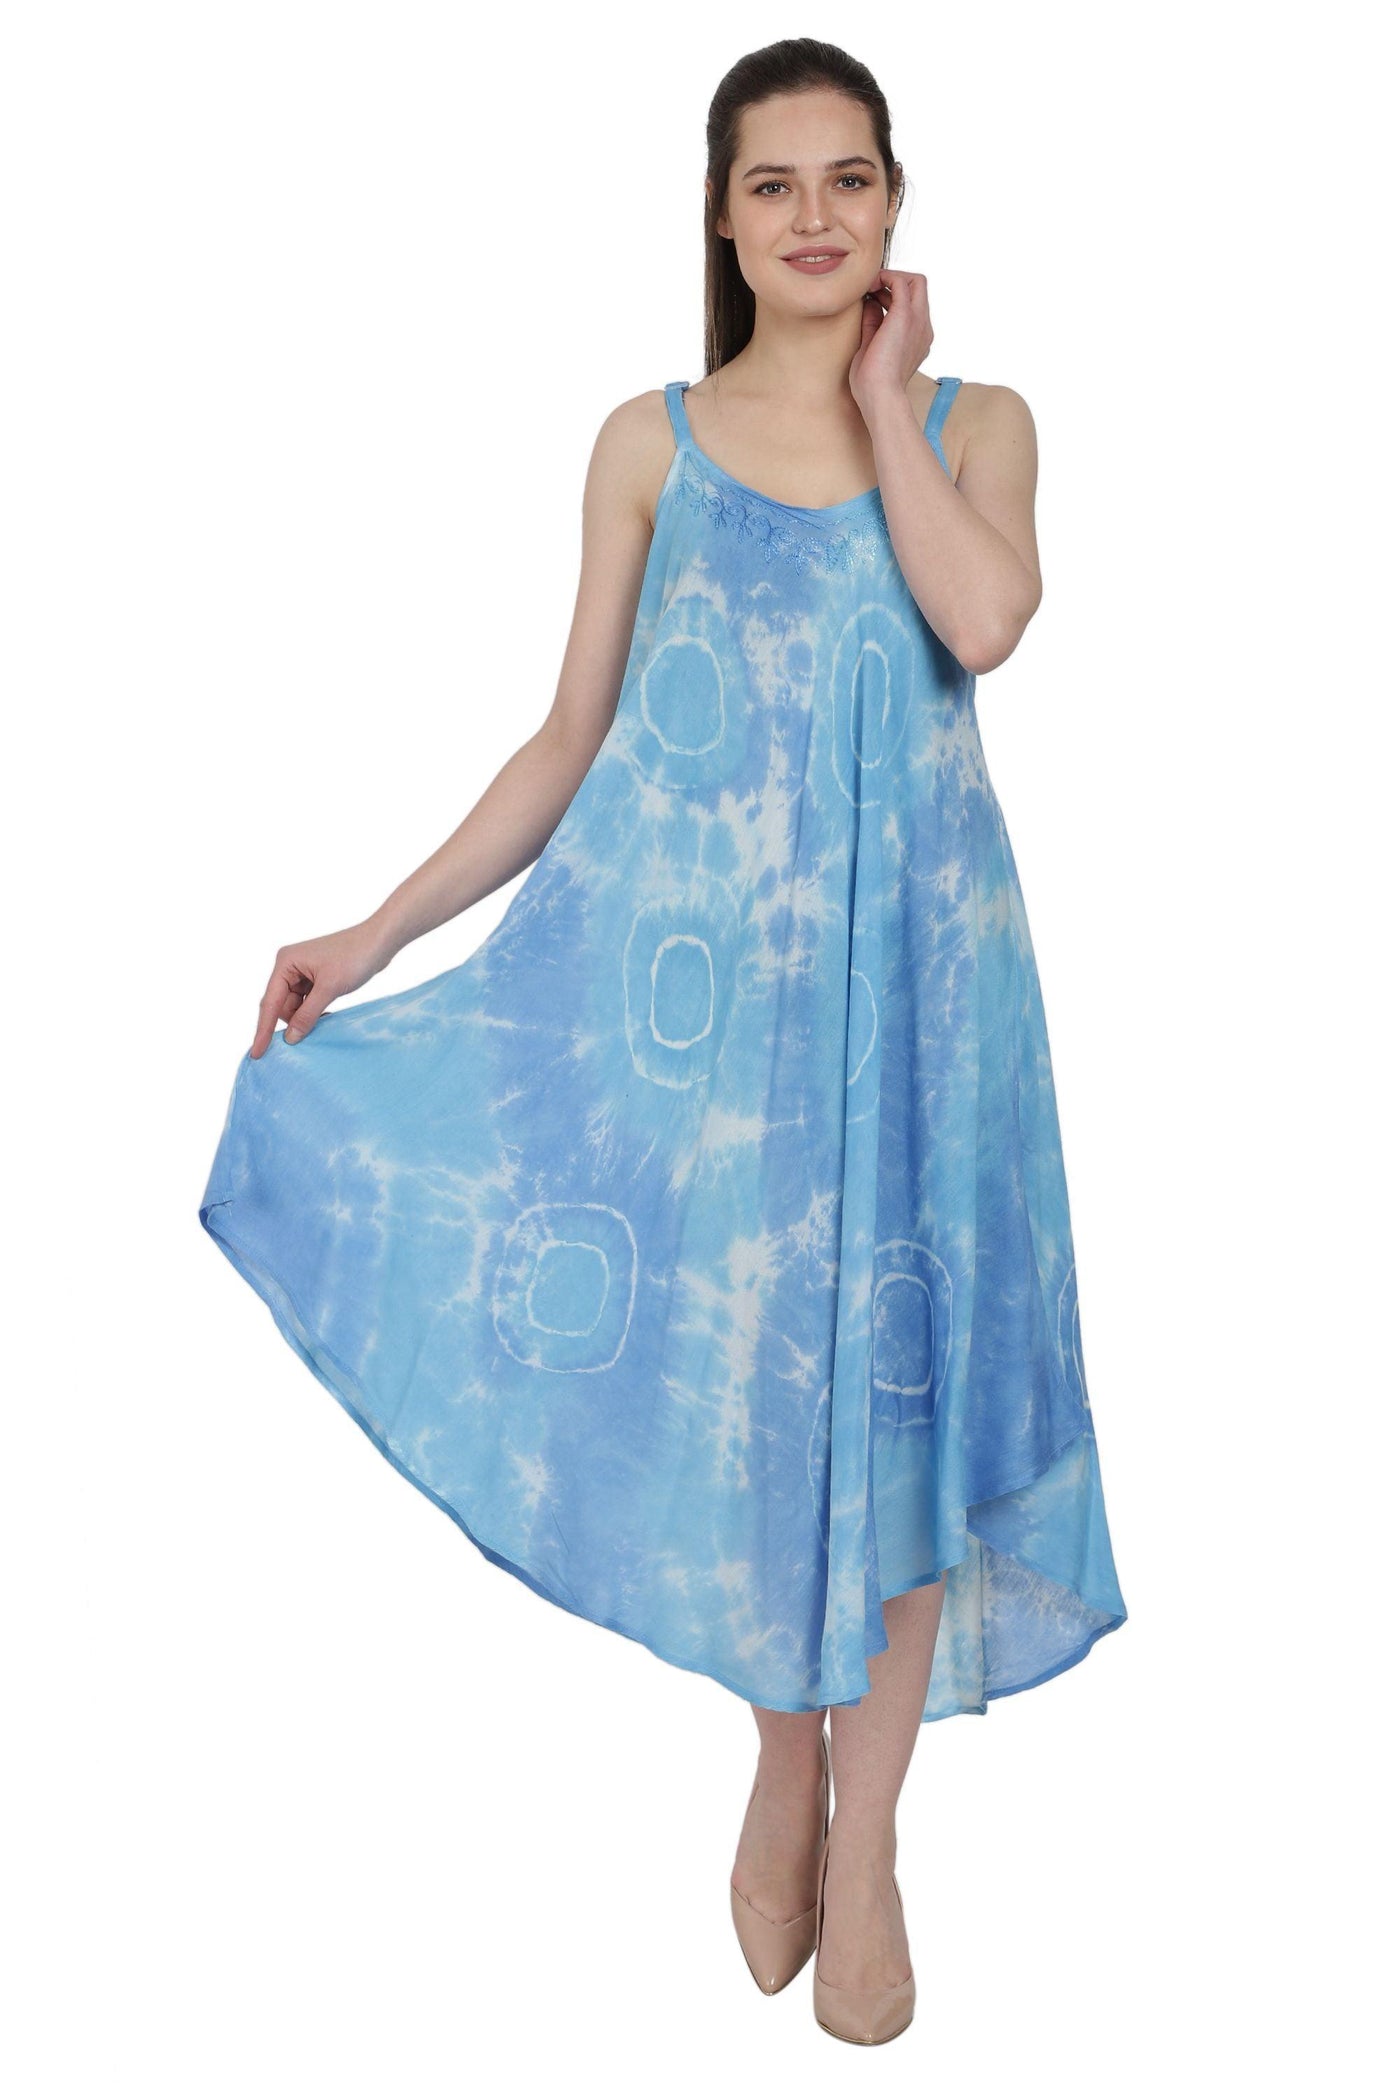 Ocean Swirl Beach Umbrella Dress UD48-2371  - Advance Apparels Inc